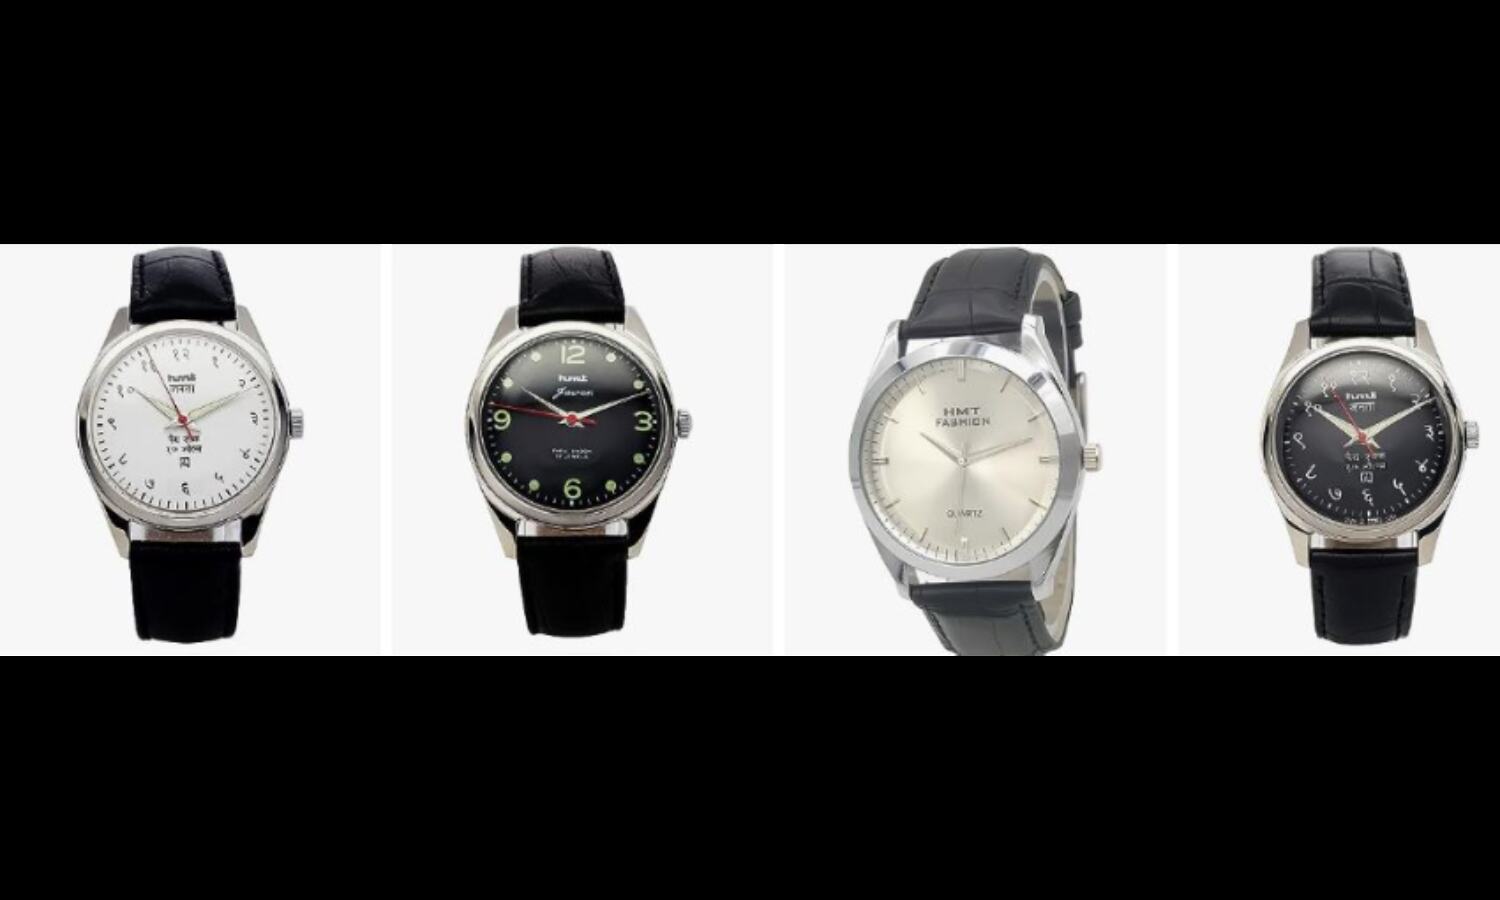 HMT Men's Watch in Sonepat at best price by Rama Krisna Watches & Goggls -  Justdial